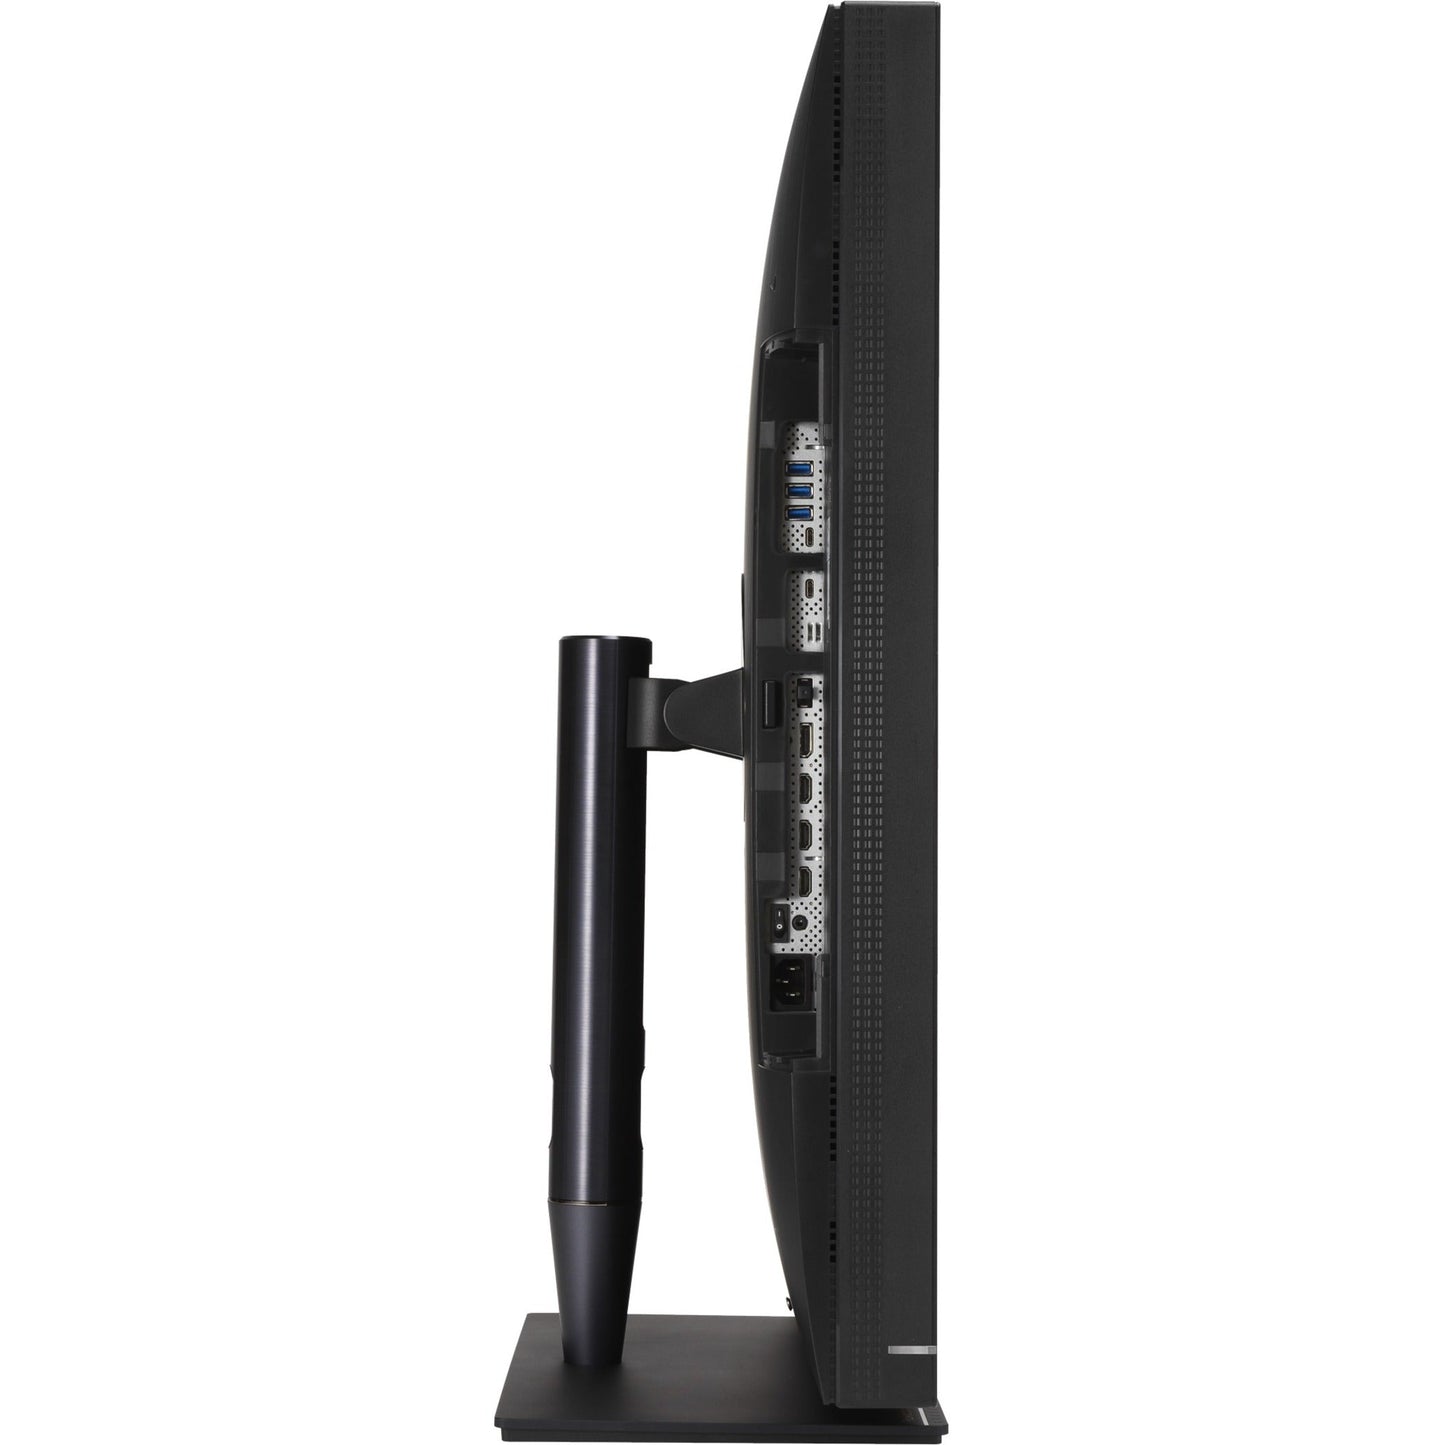 Asus ProArt PA32UCG-K 32" 4K UHD LCD Monitor - 16:9 - Black